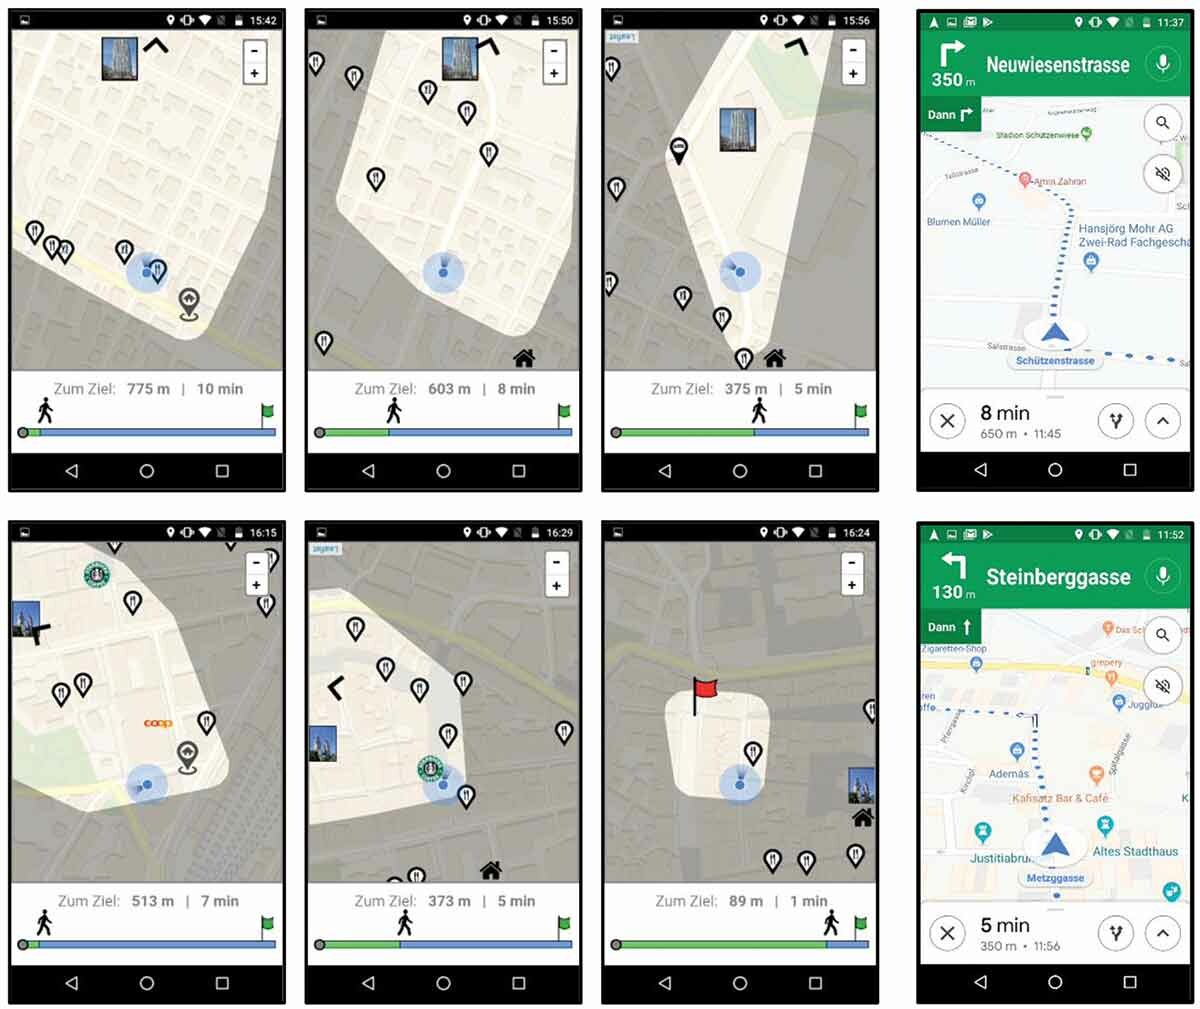 Screenshots of the novel navigation system and Google Maps